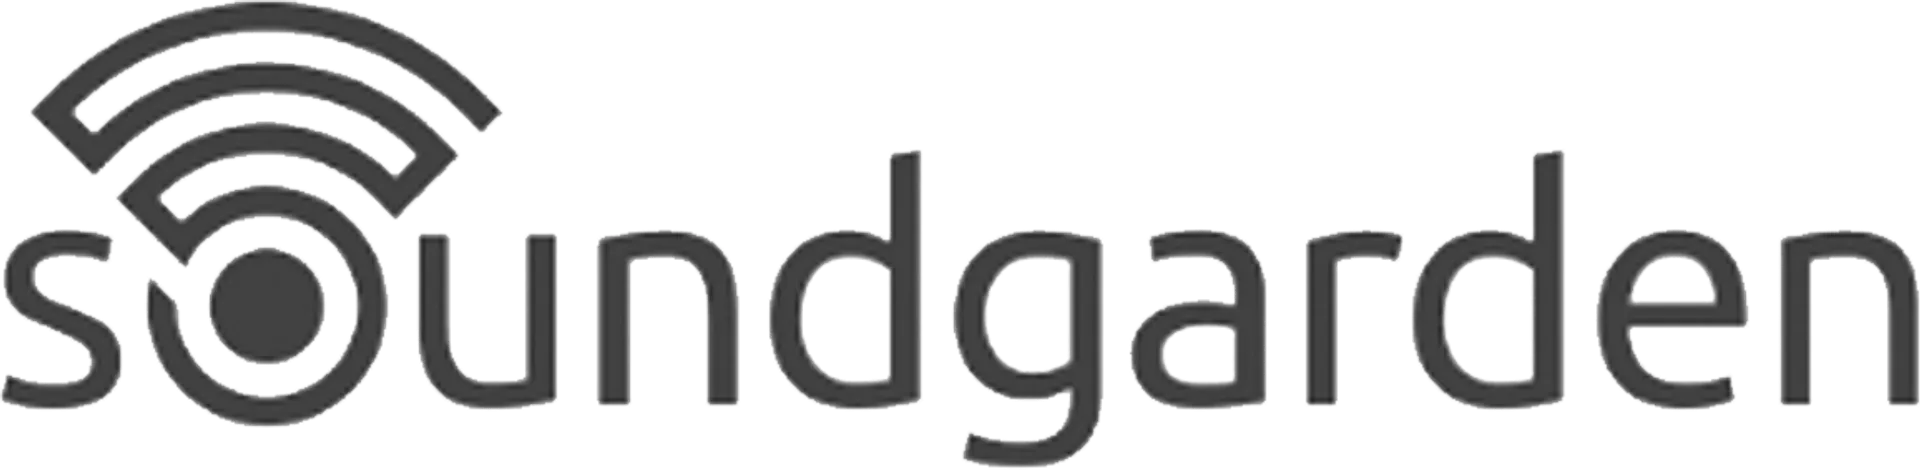 SOUNDGARDEN logo